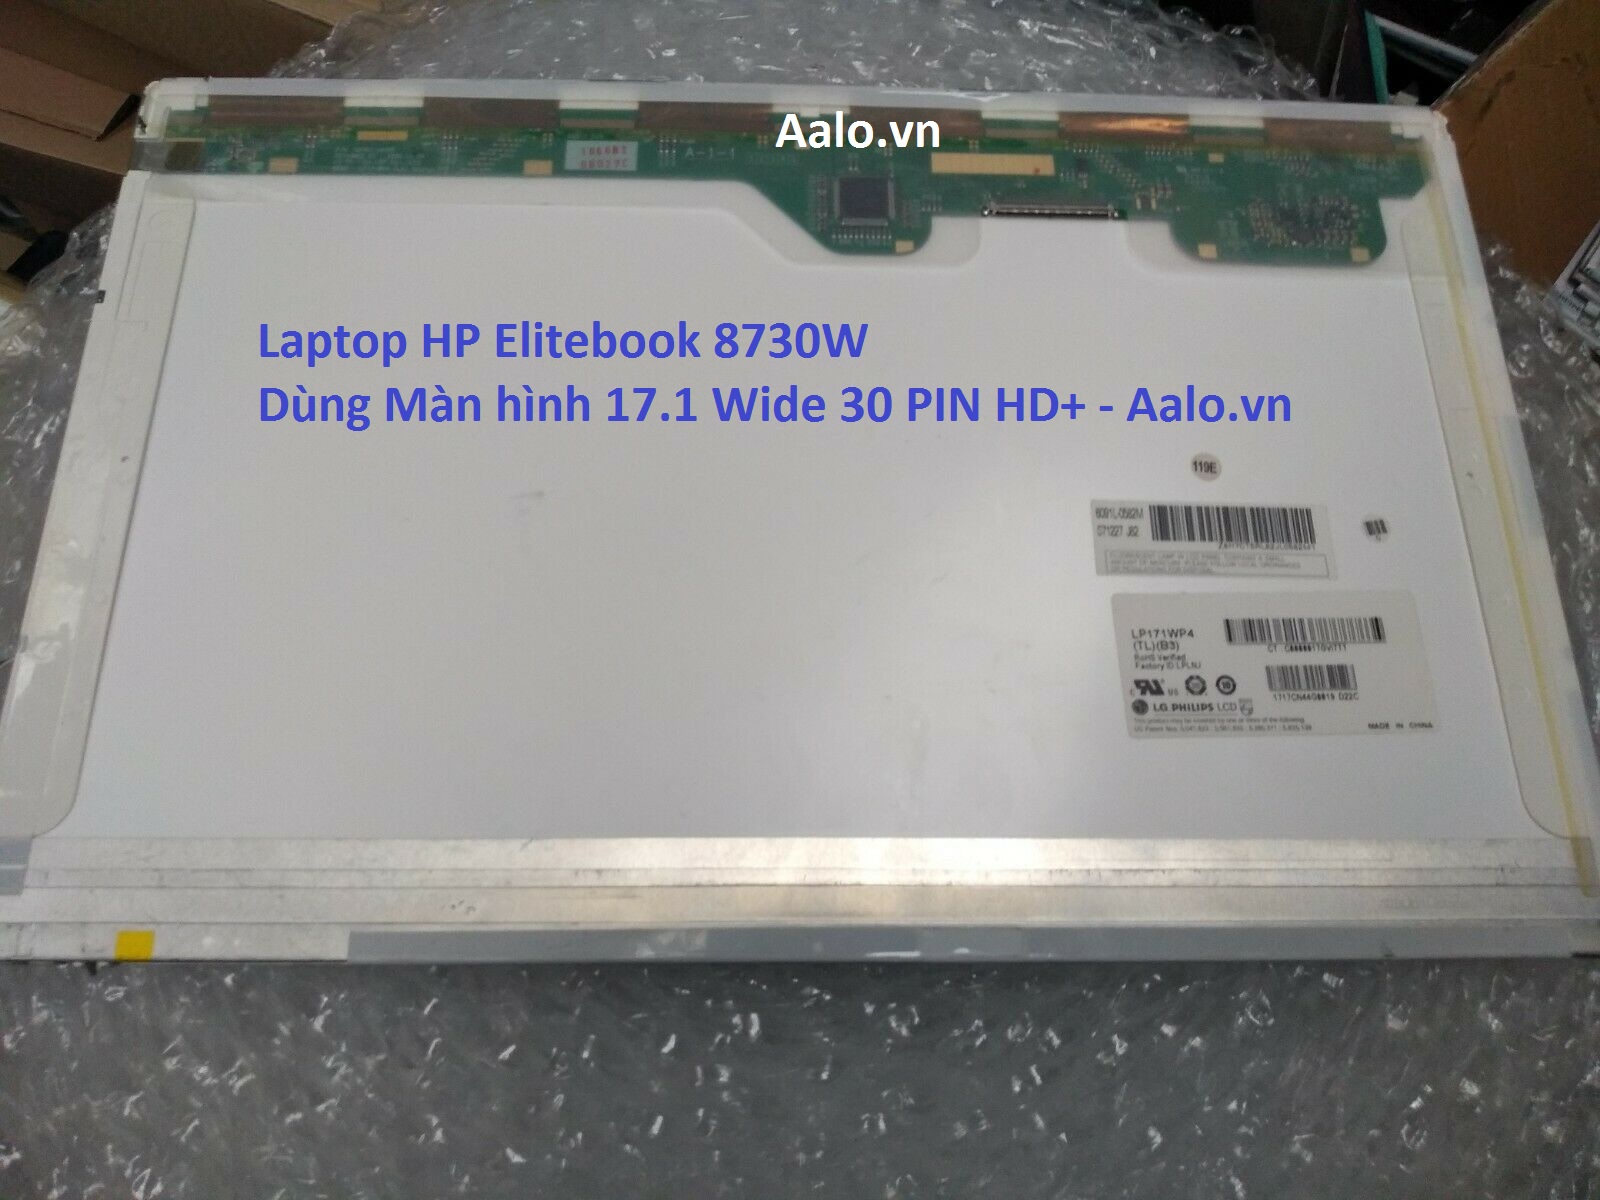 Màn hình Laptop HP Elitebook 8730W - Aalo.vn